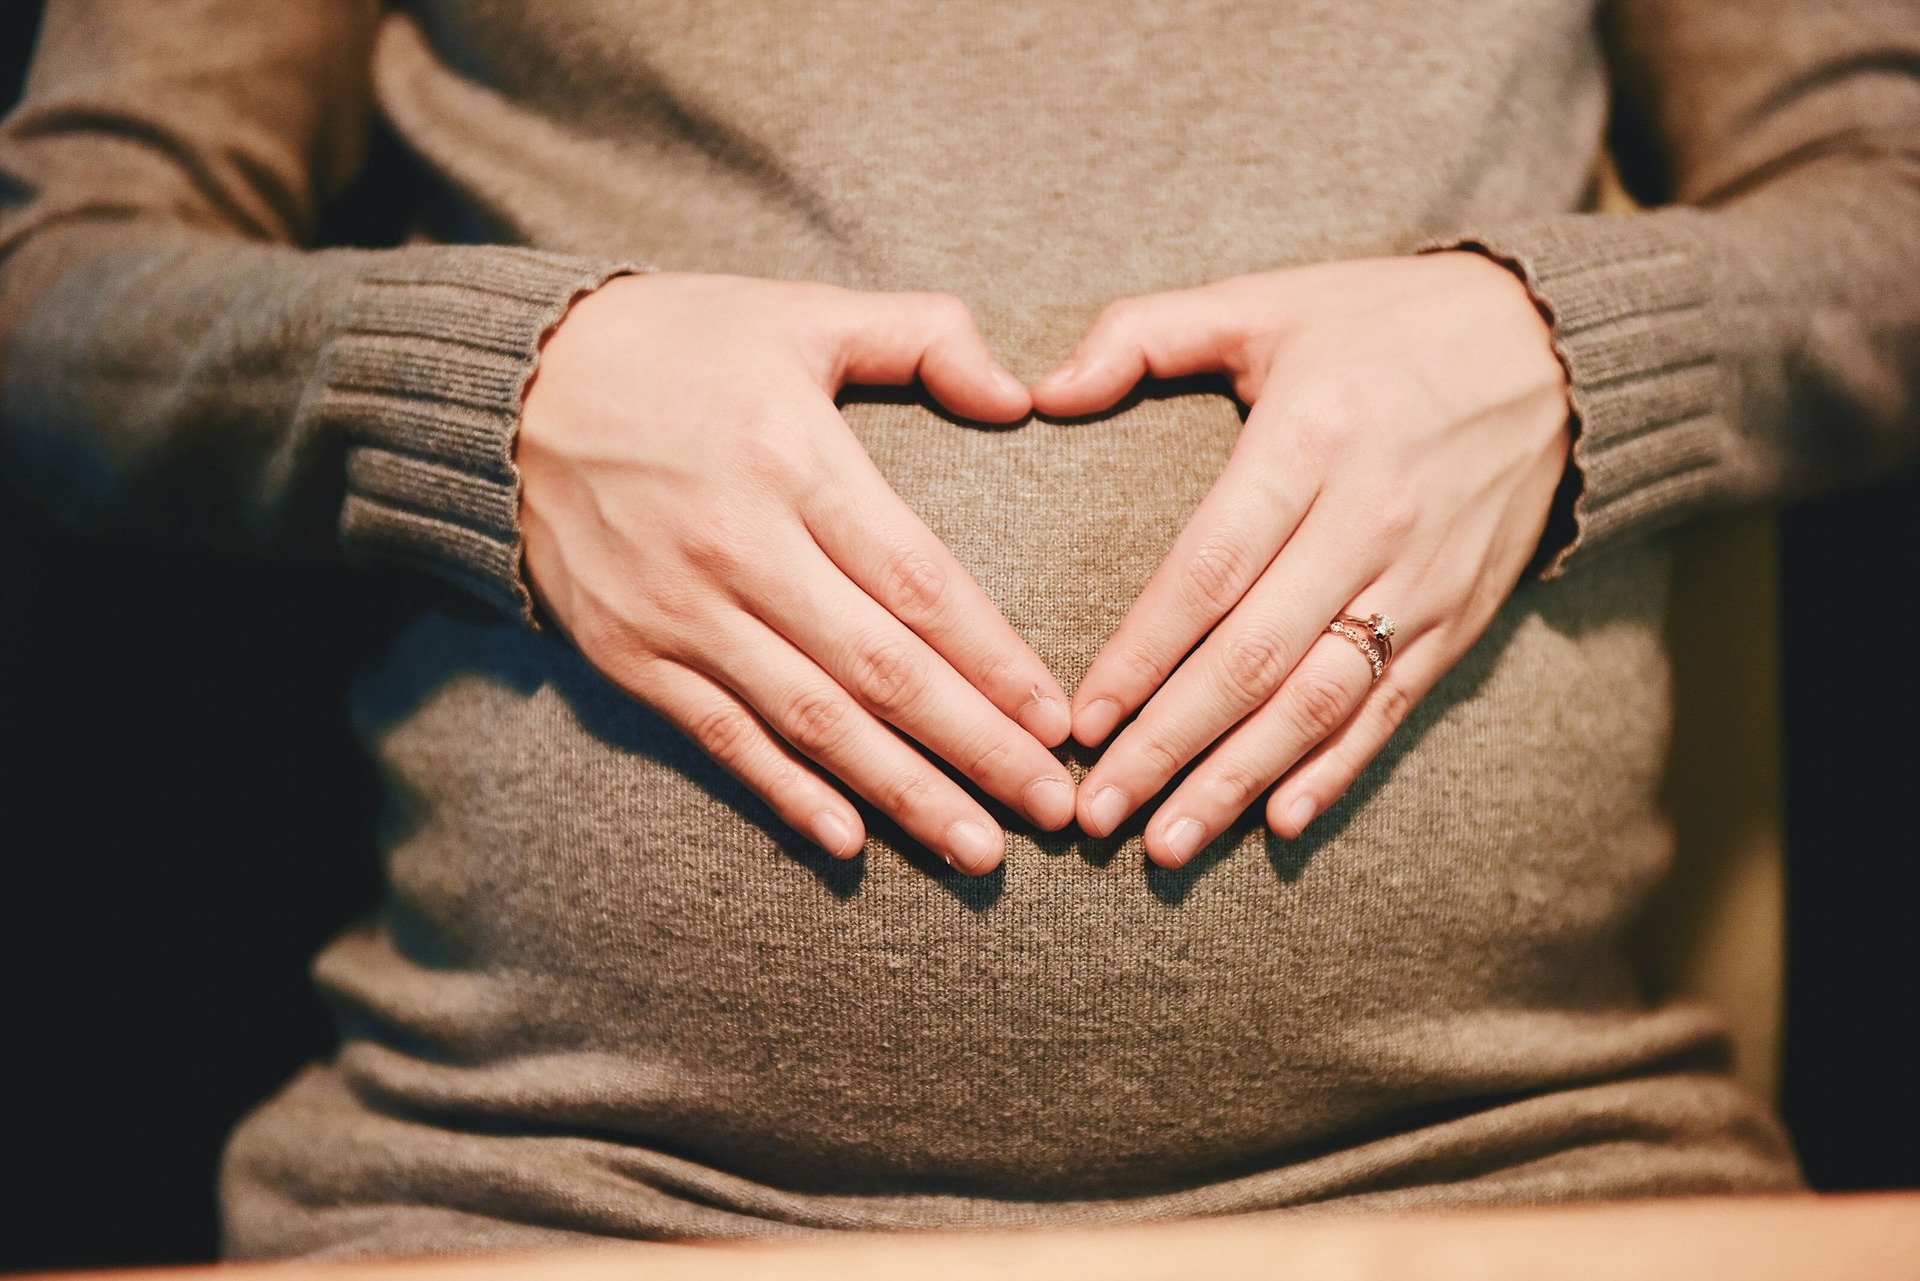 Top Signs of Healthy Pregnancy